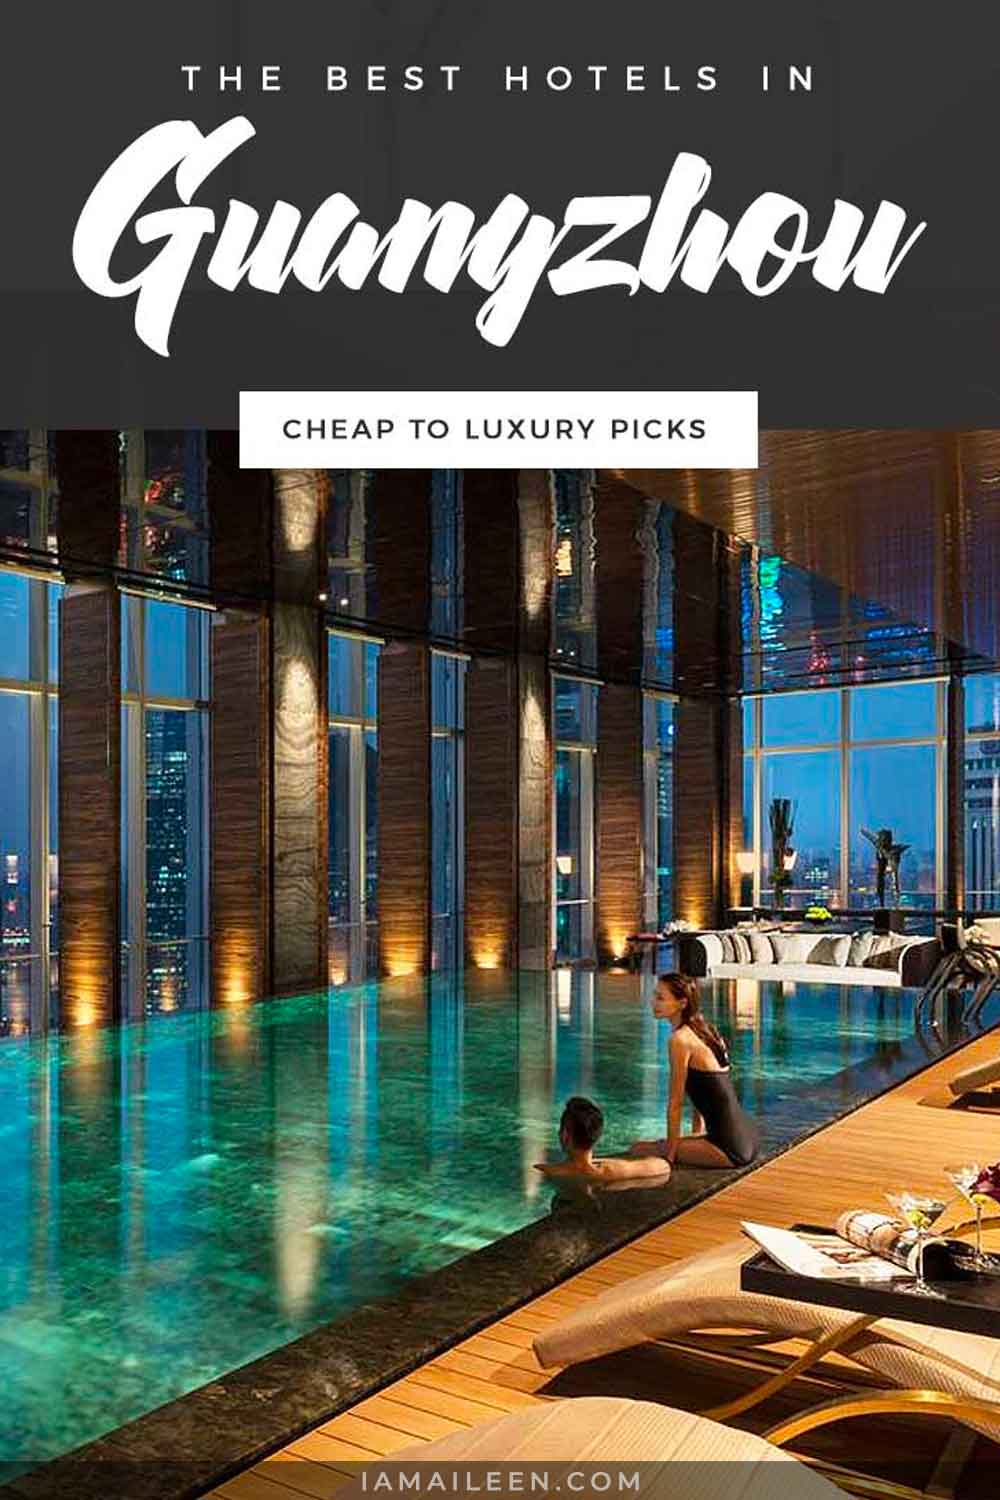 The Best Hotels Guangzhou, China: Cheap to Luxury Picks